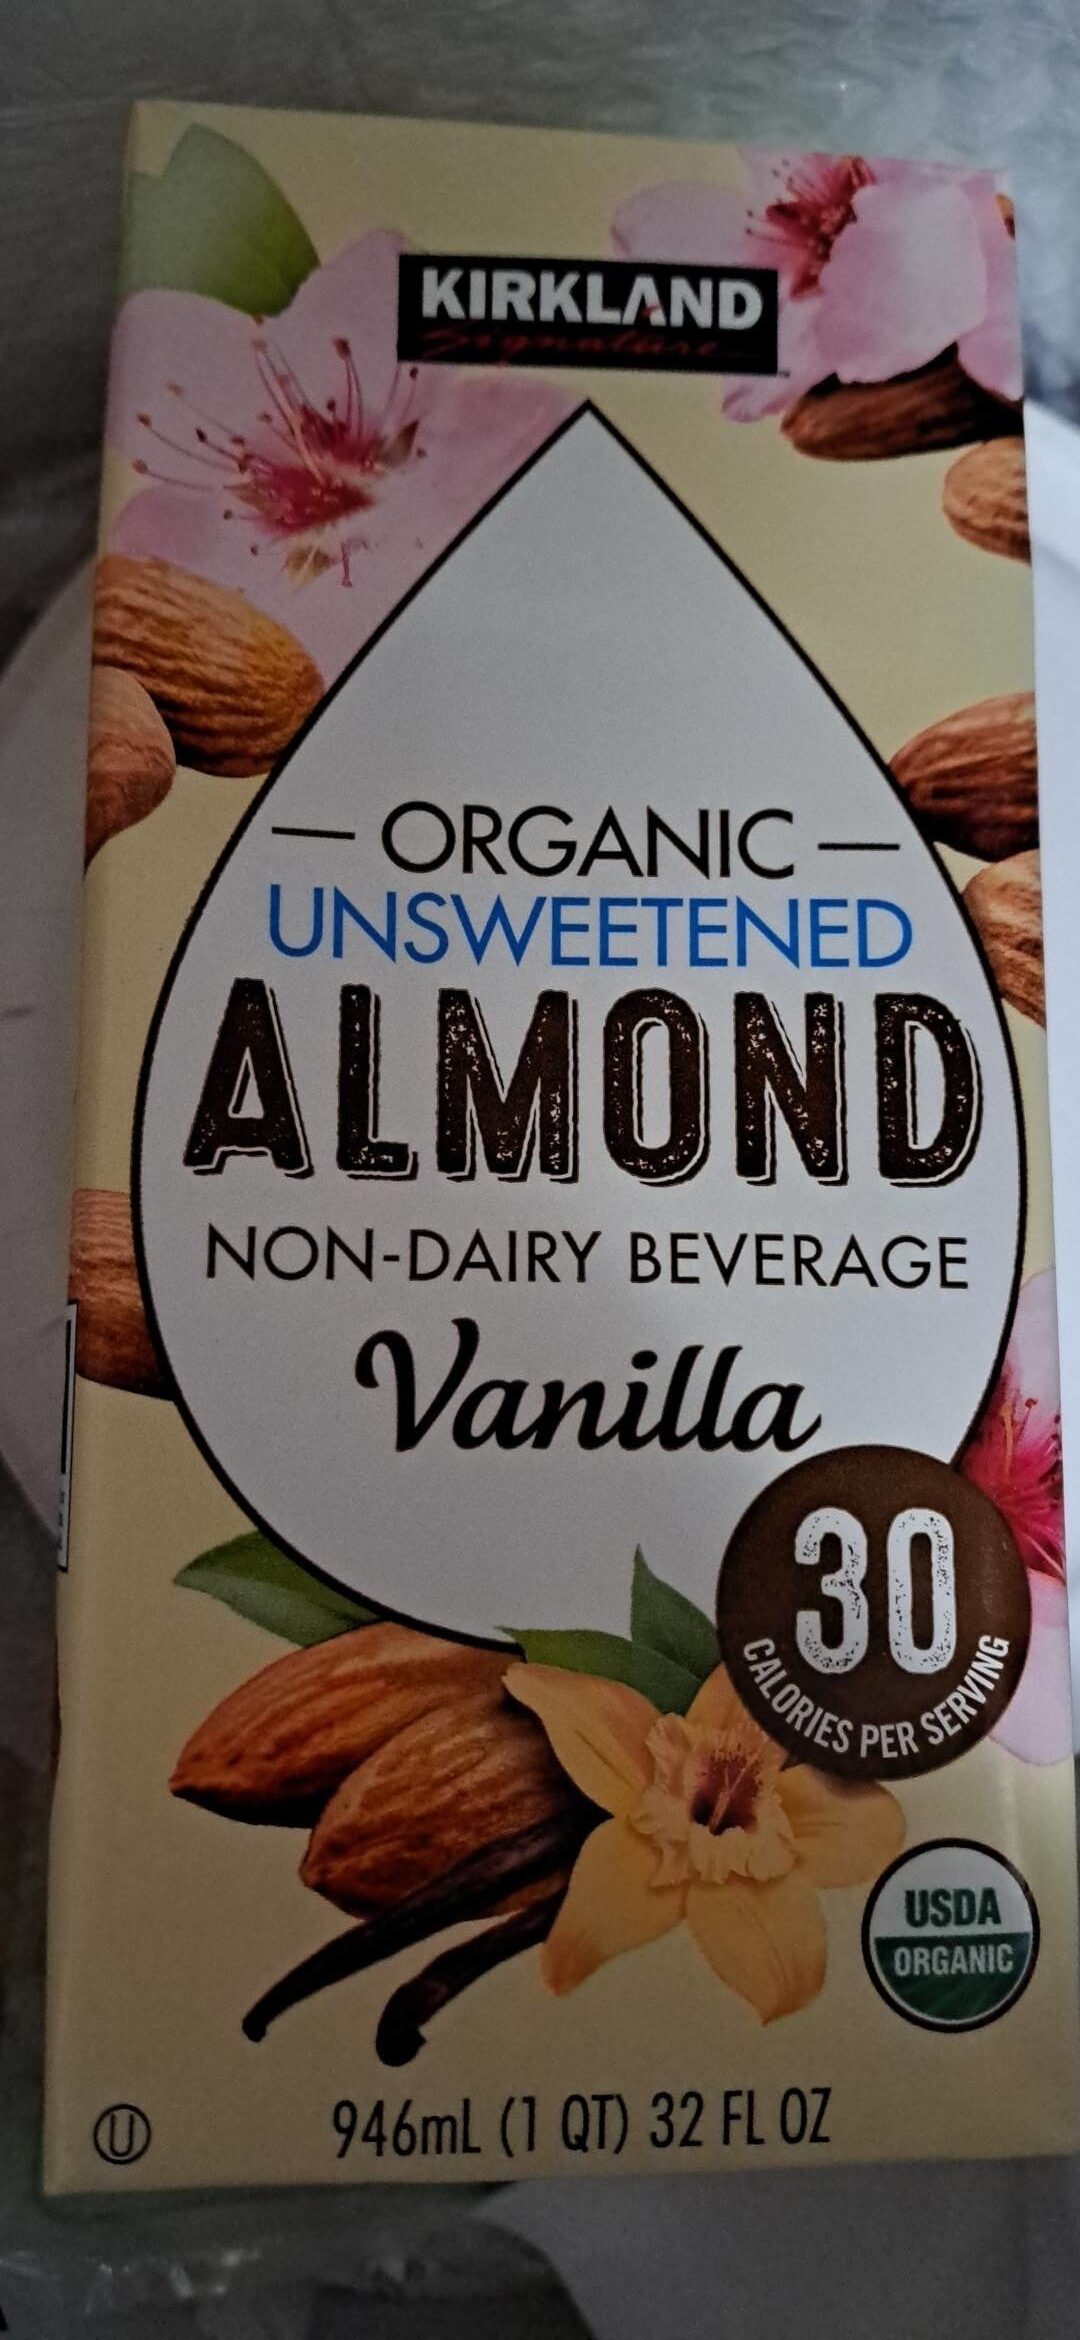 Organic unsweetened almond non dairy beverage vanilla - Product - en